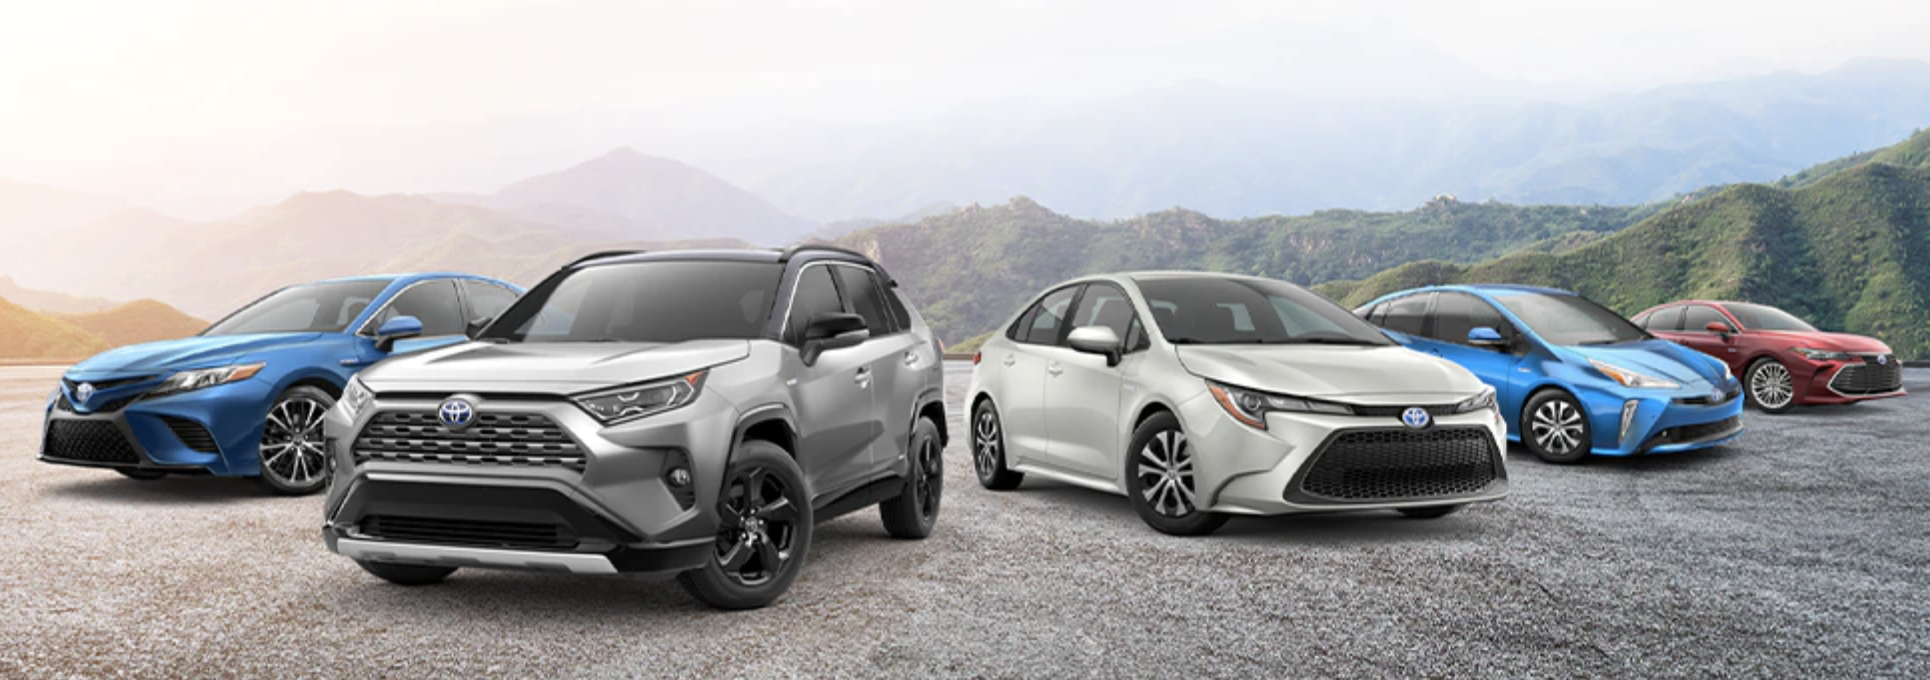 Toyota Alternative Fuel Vehicles